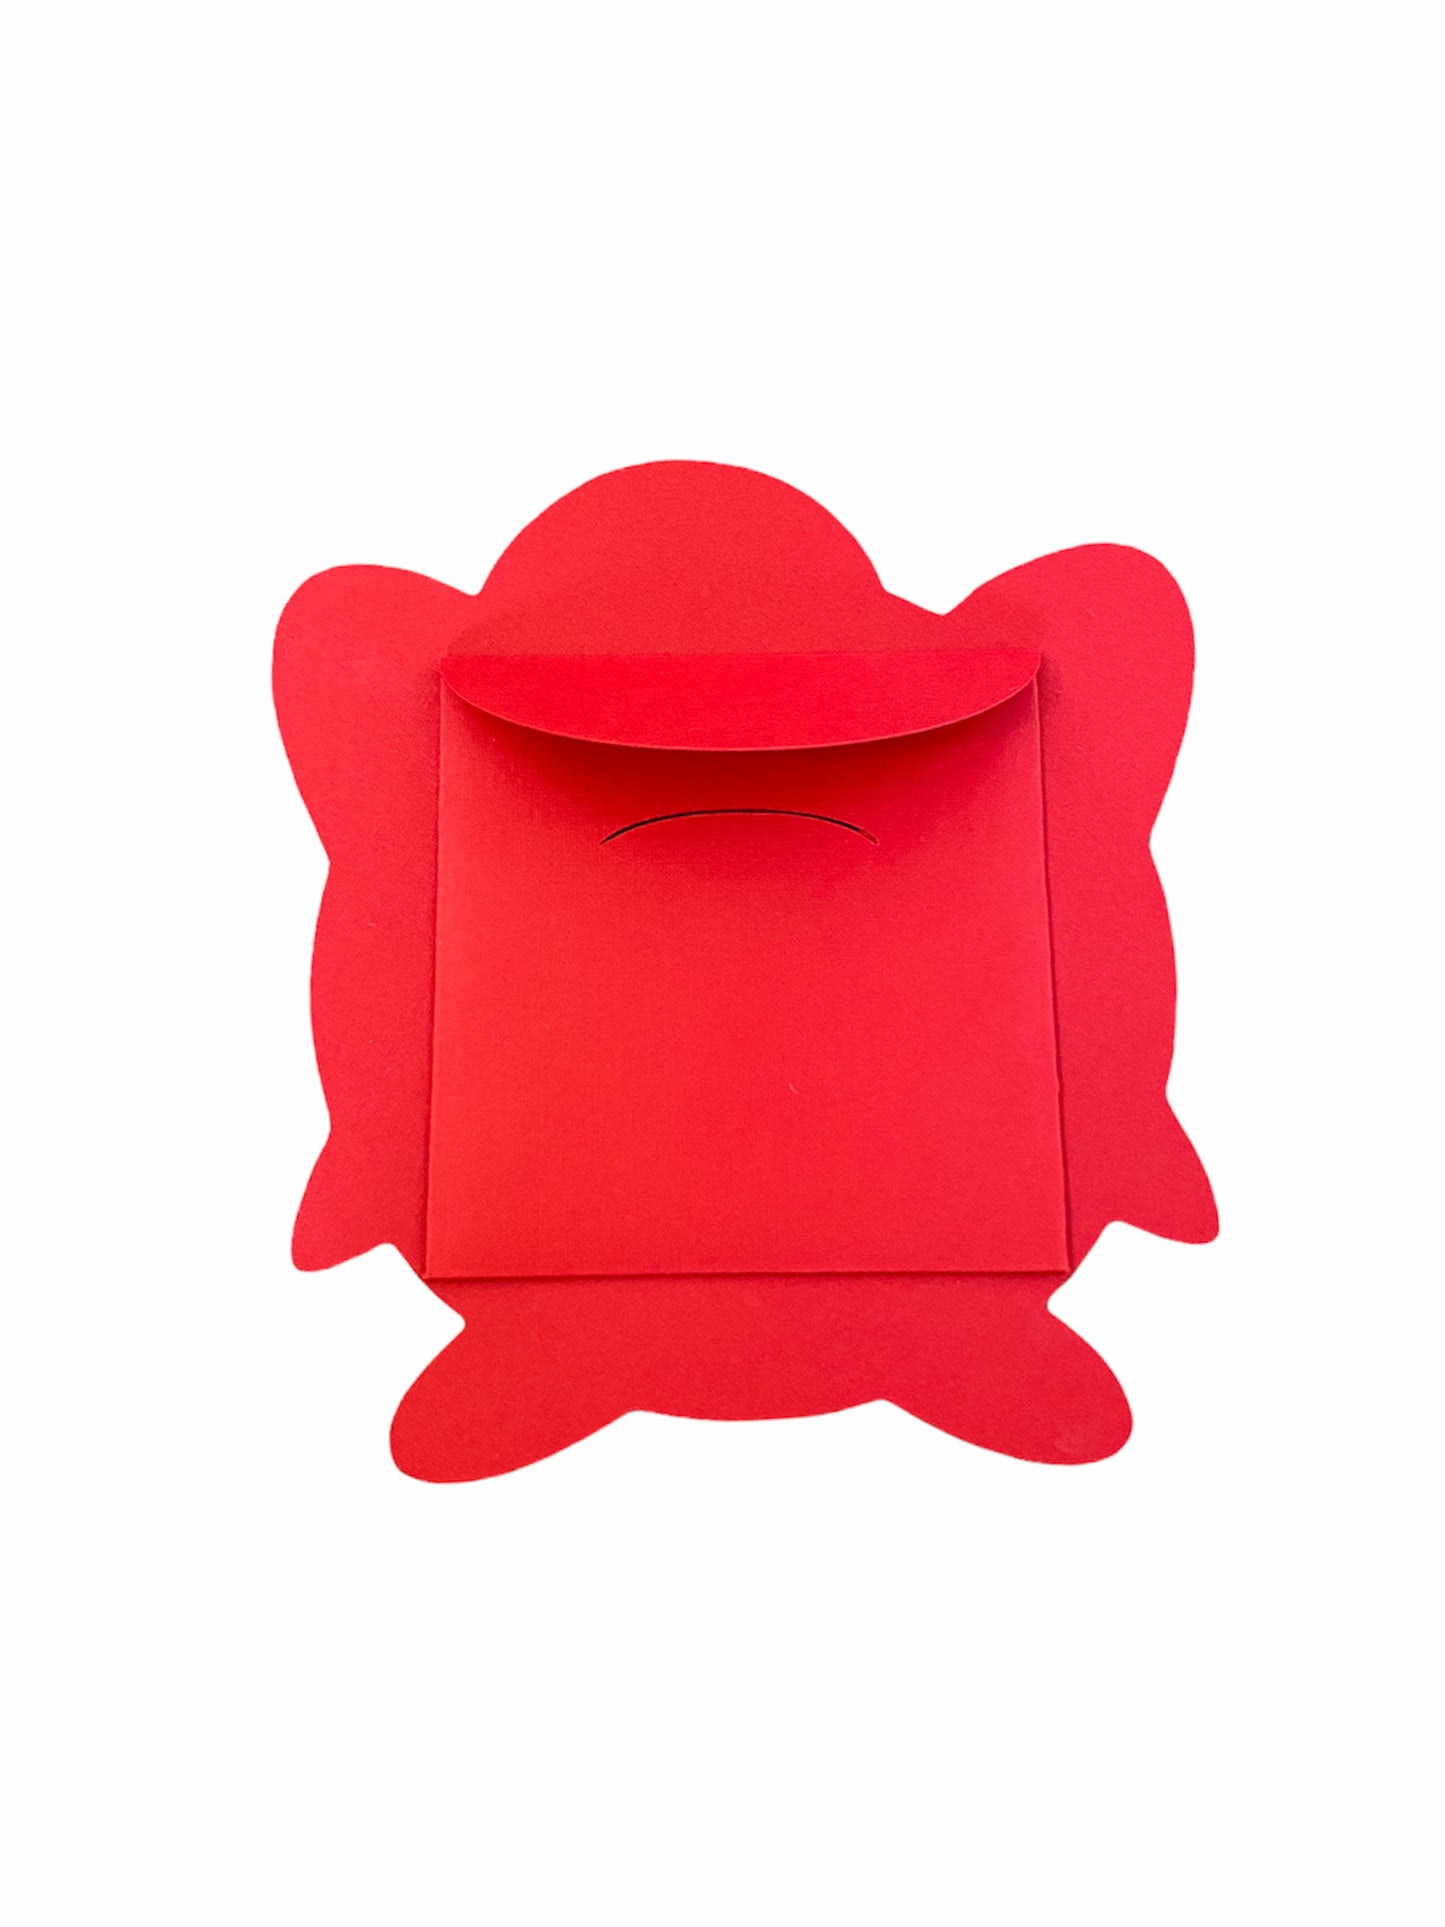 Chunkémon Jigglypuff Red Envelope